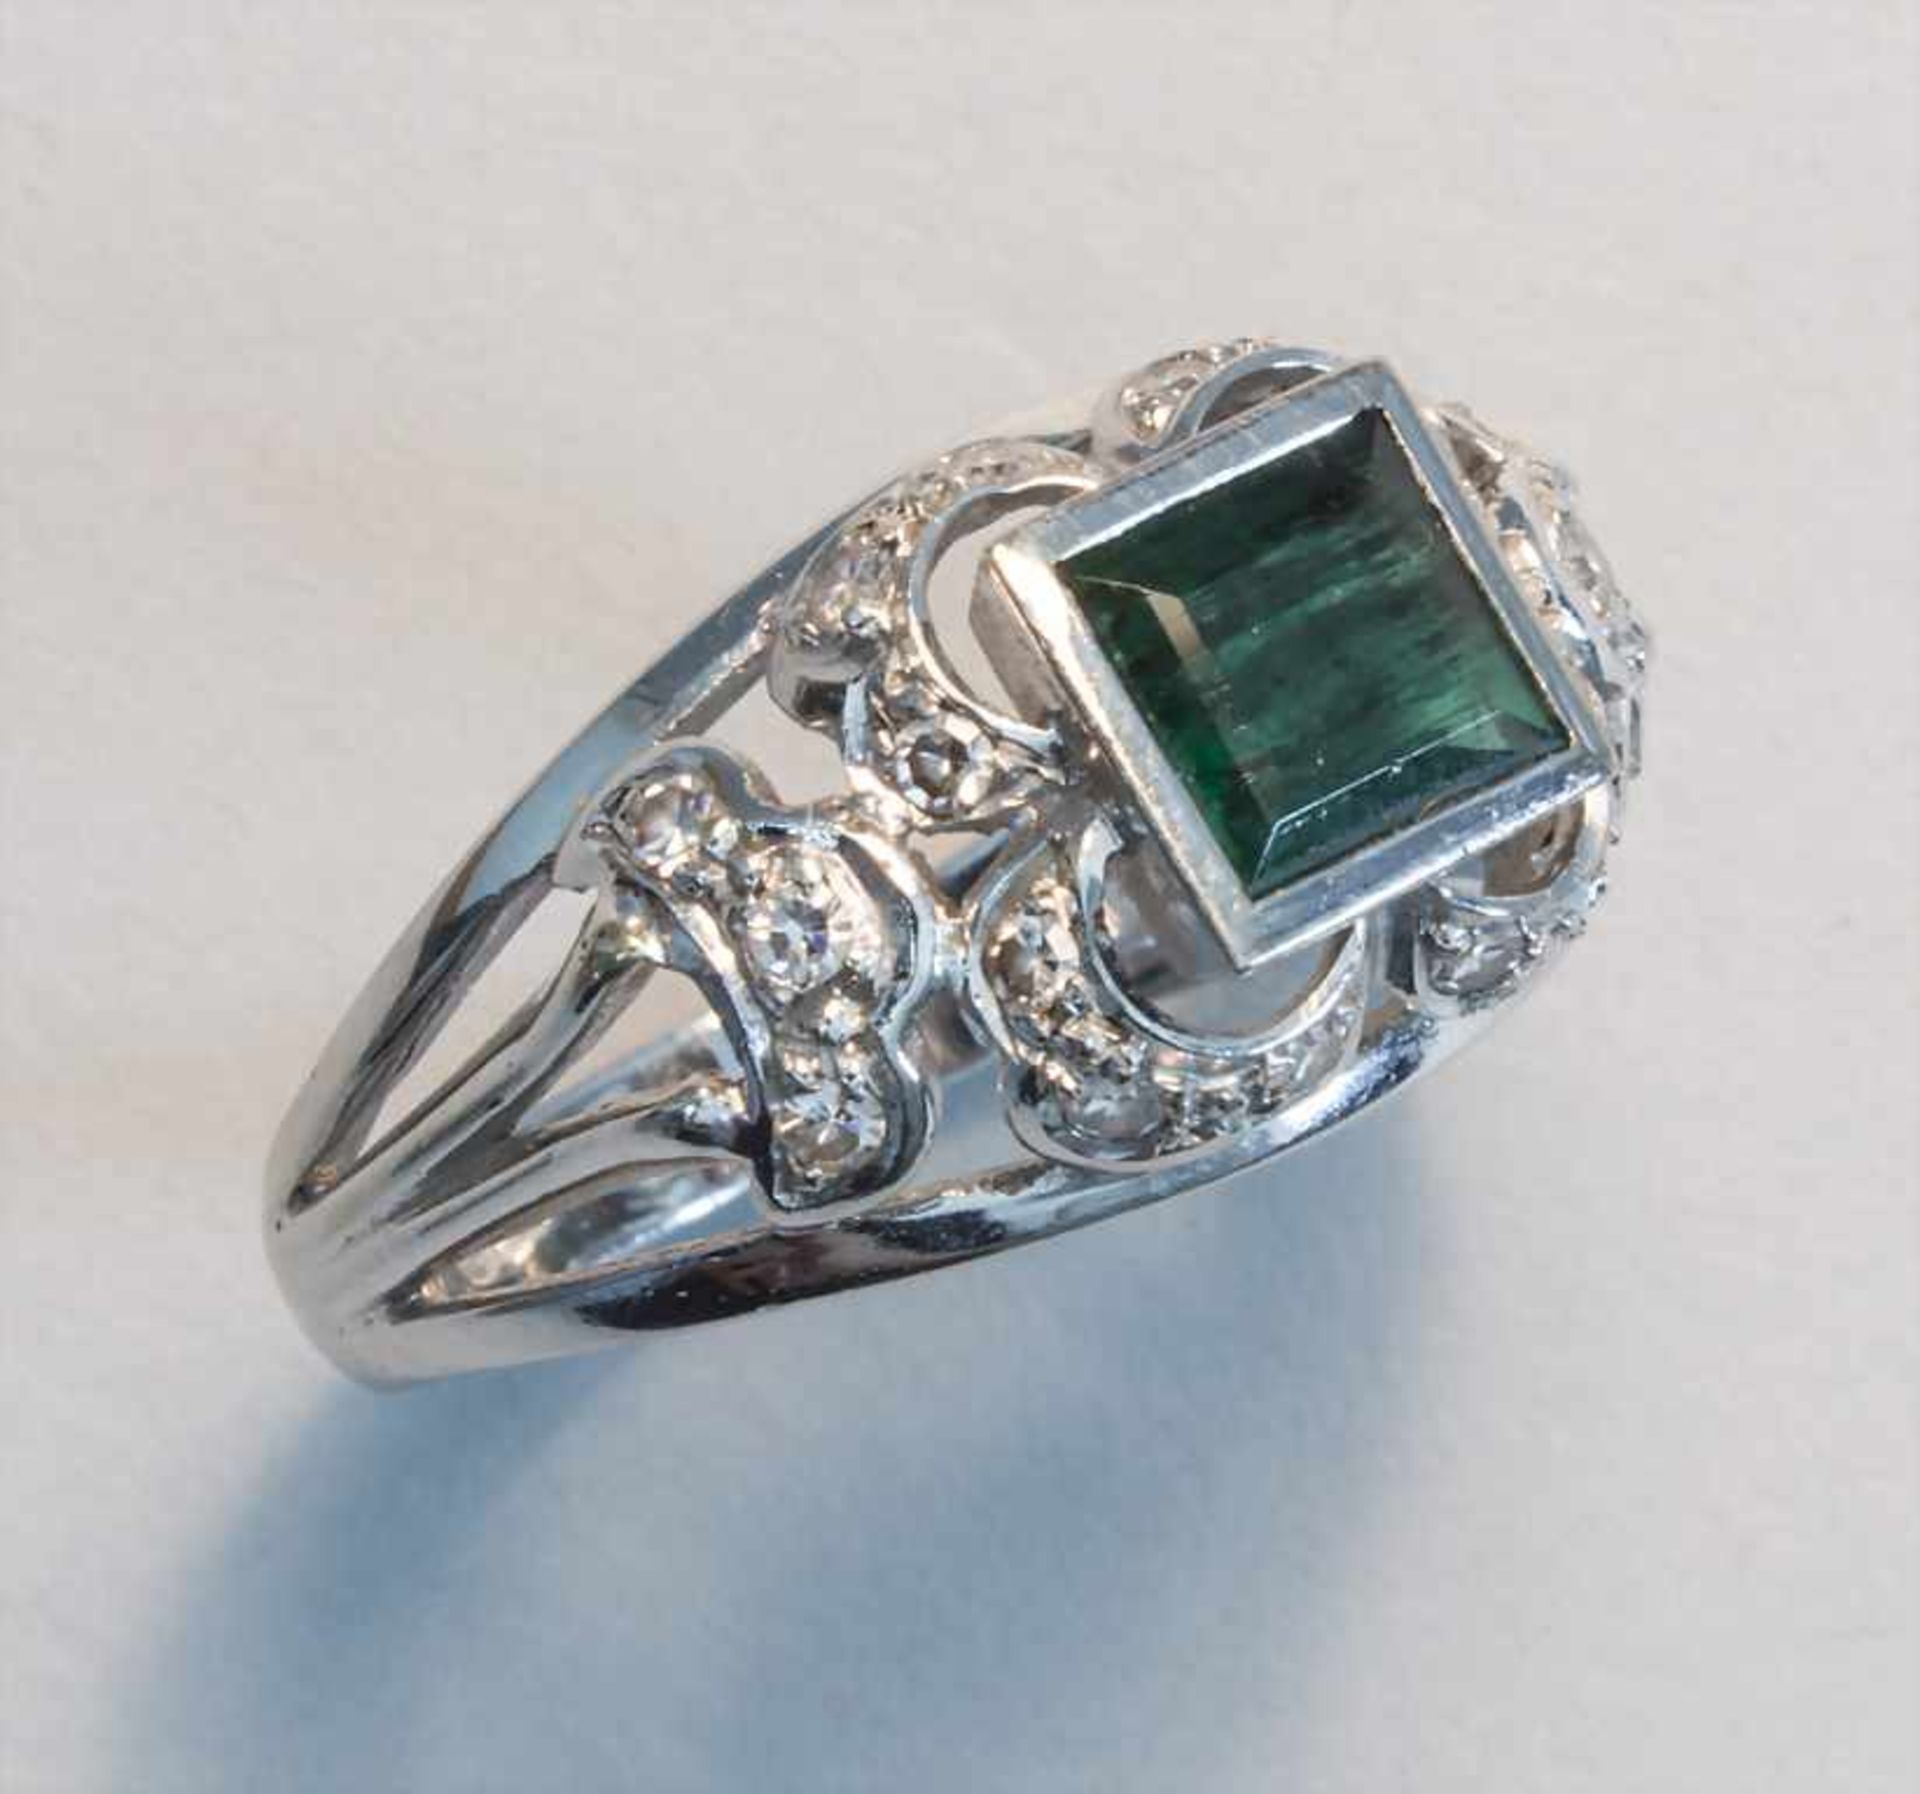 Damenring mit grünem Turmalin und Diamanten / A ladies ring with a green tourmaline and - Image 2 of 4